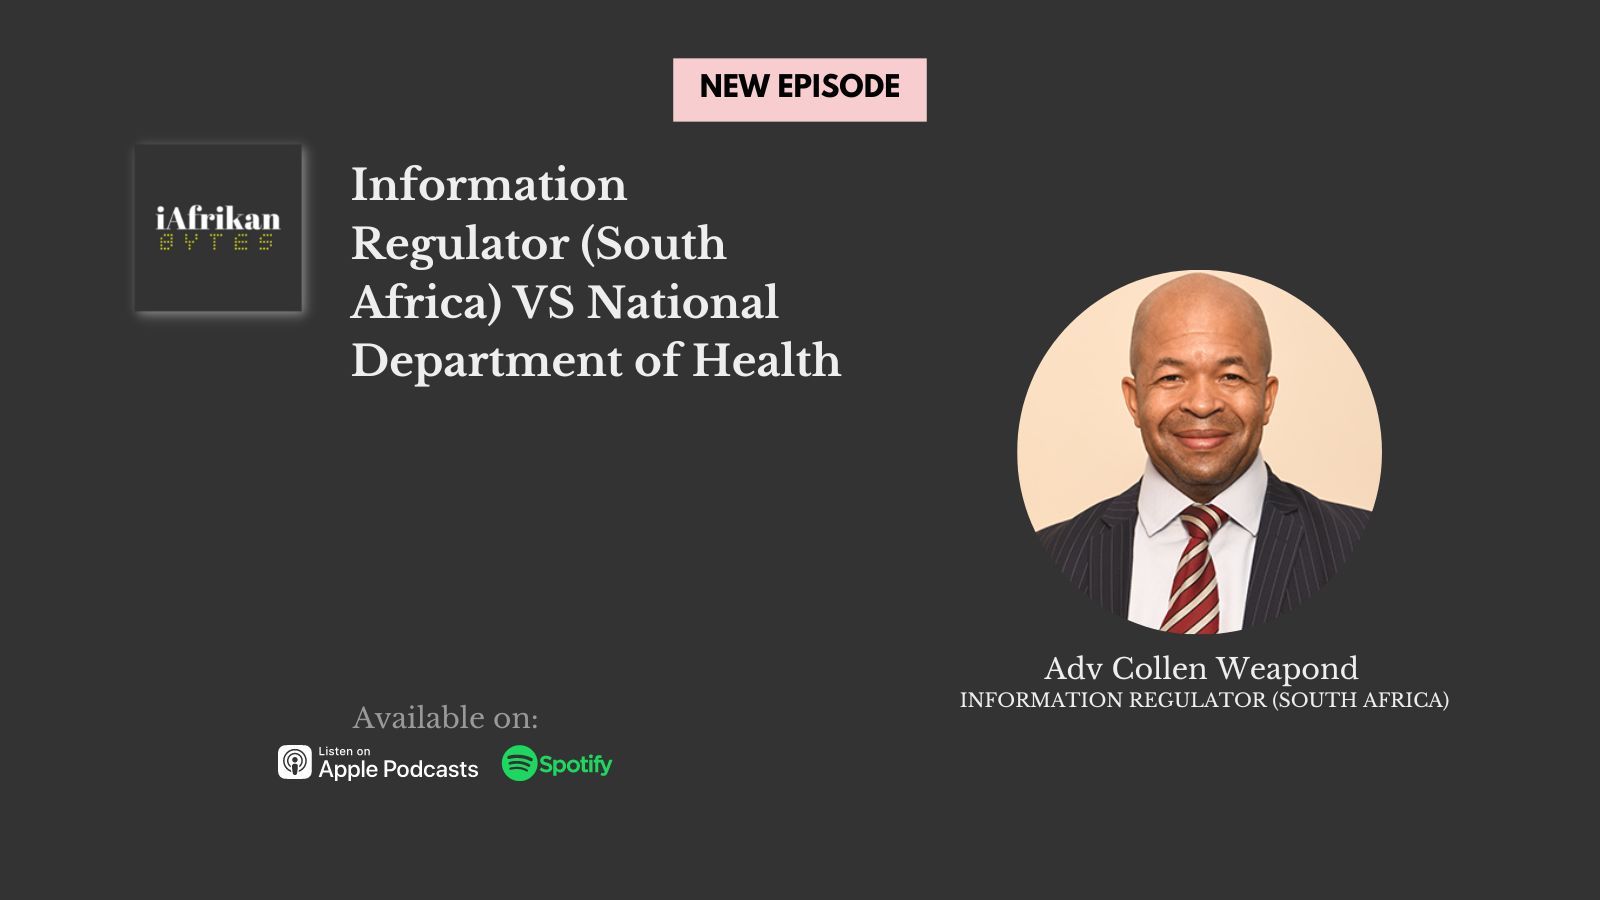 Information Regulator (South Africa) VS National Department of Health